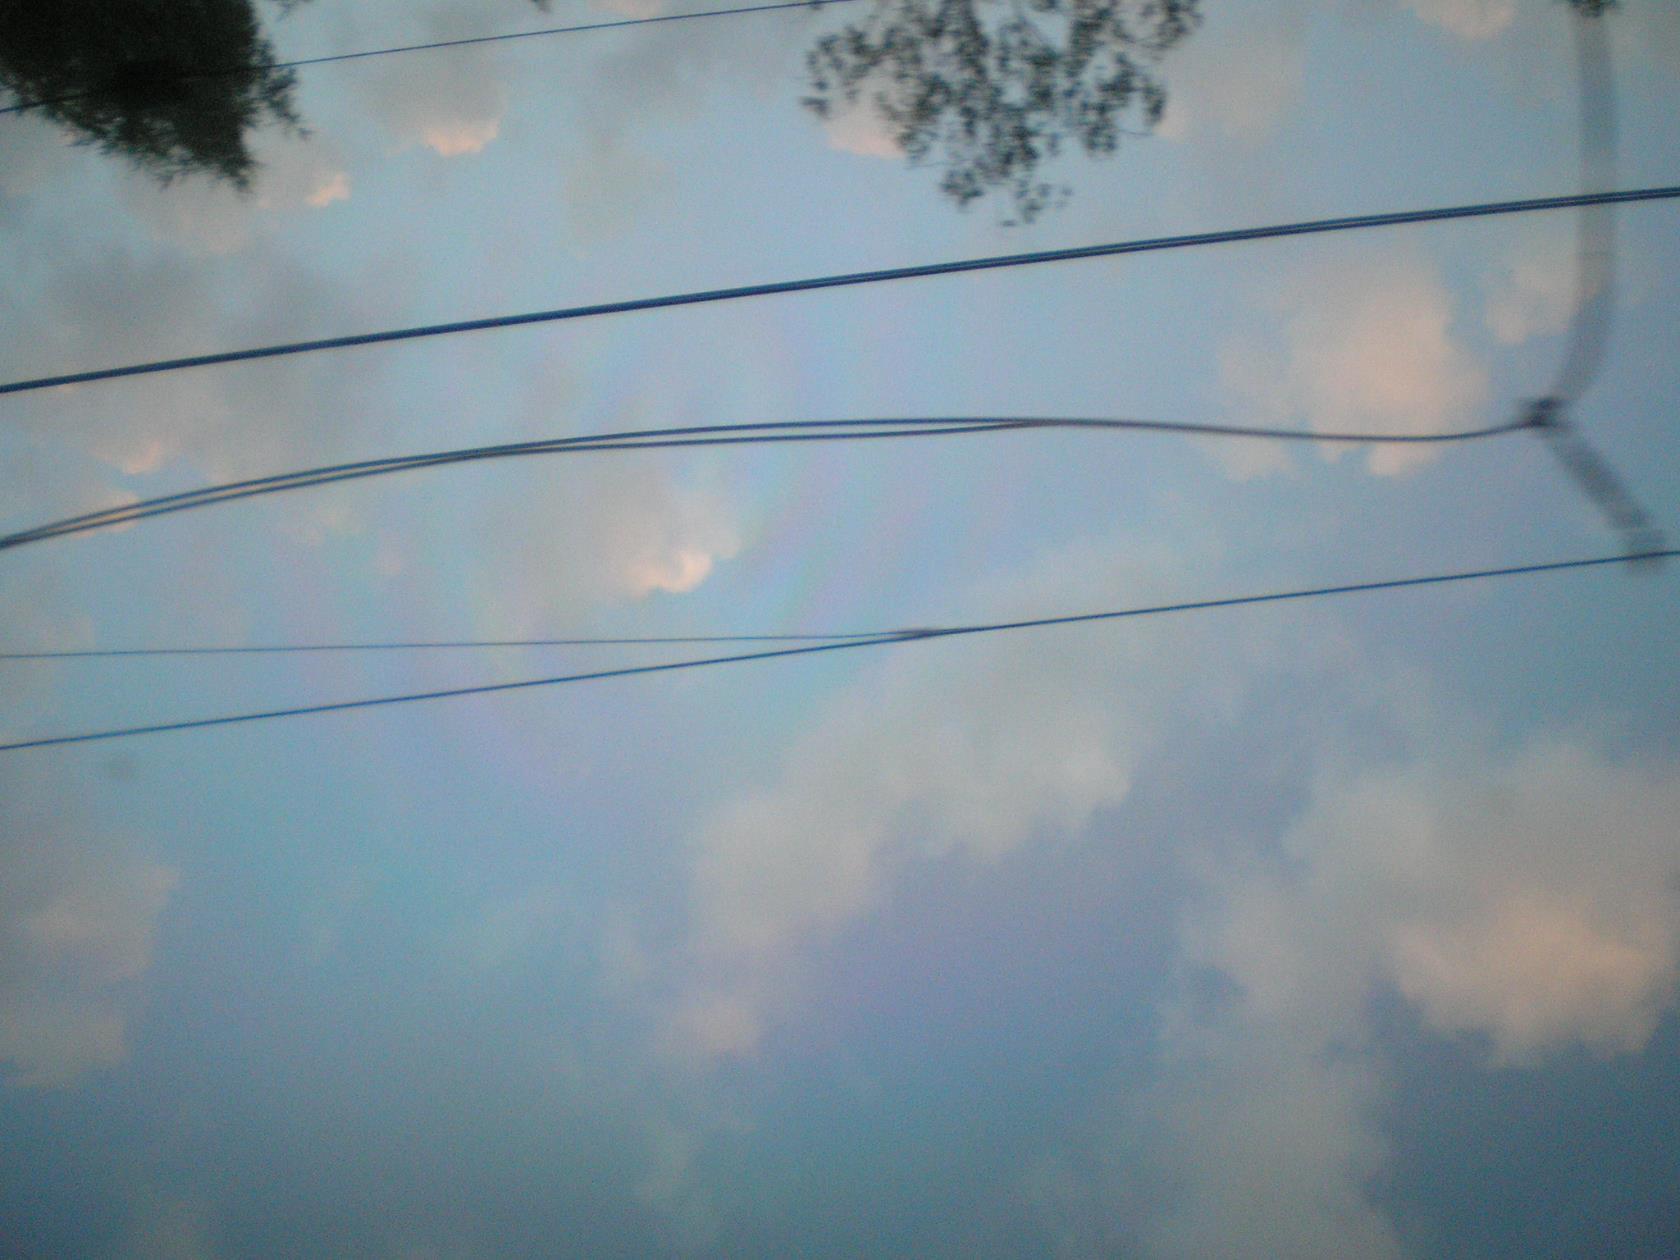  Спиральная радуга в небе (фото и видео) - фото 3